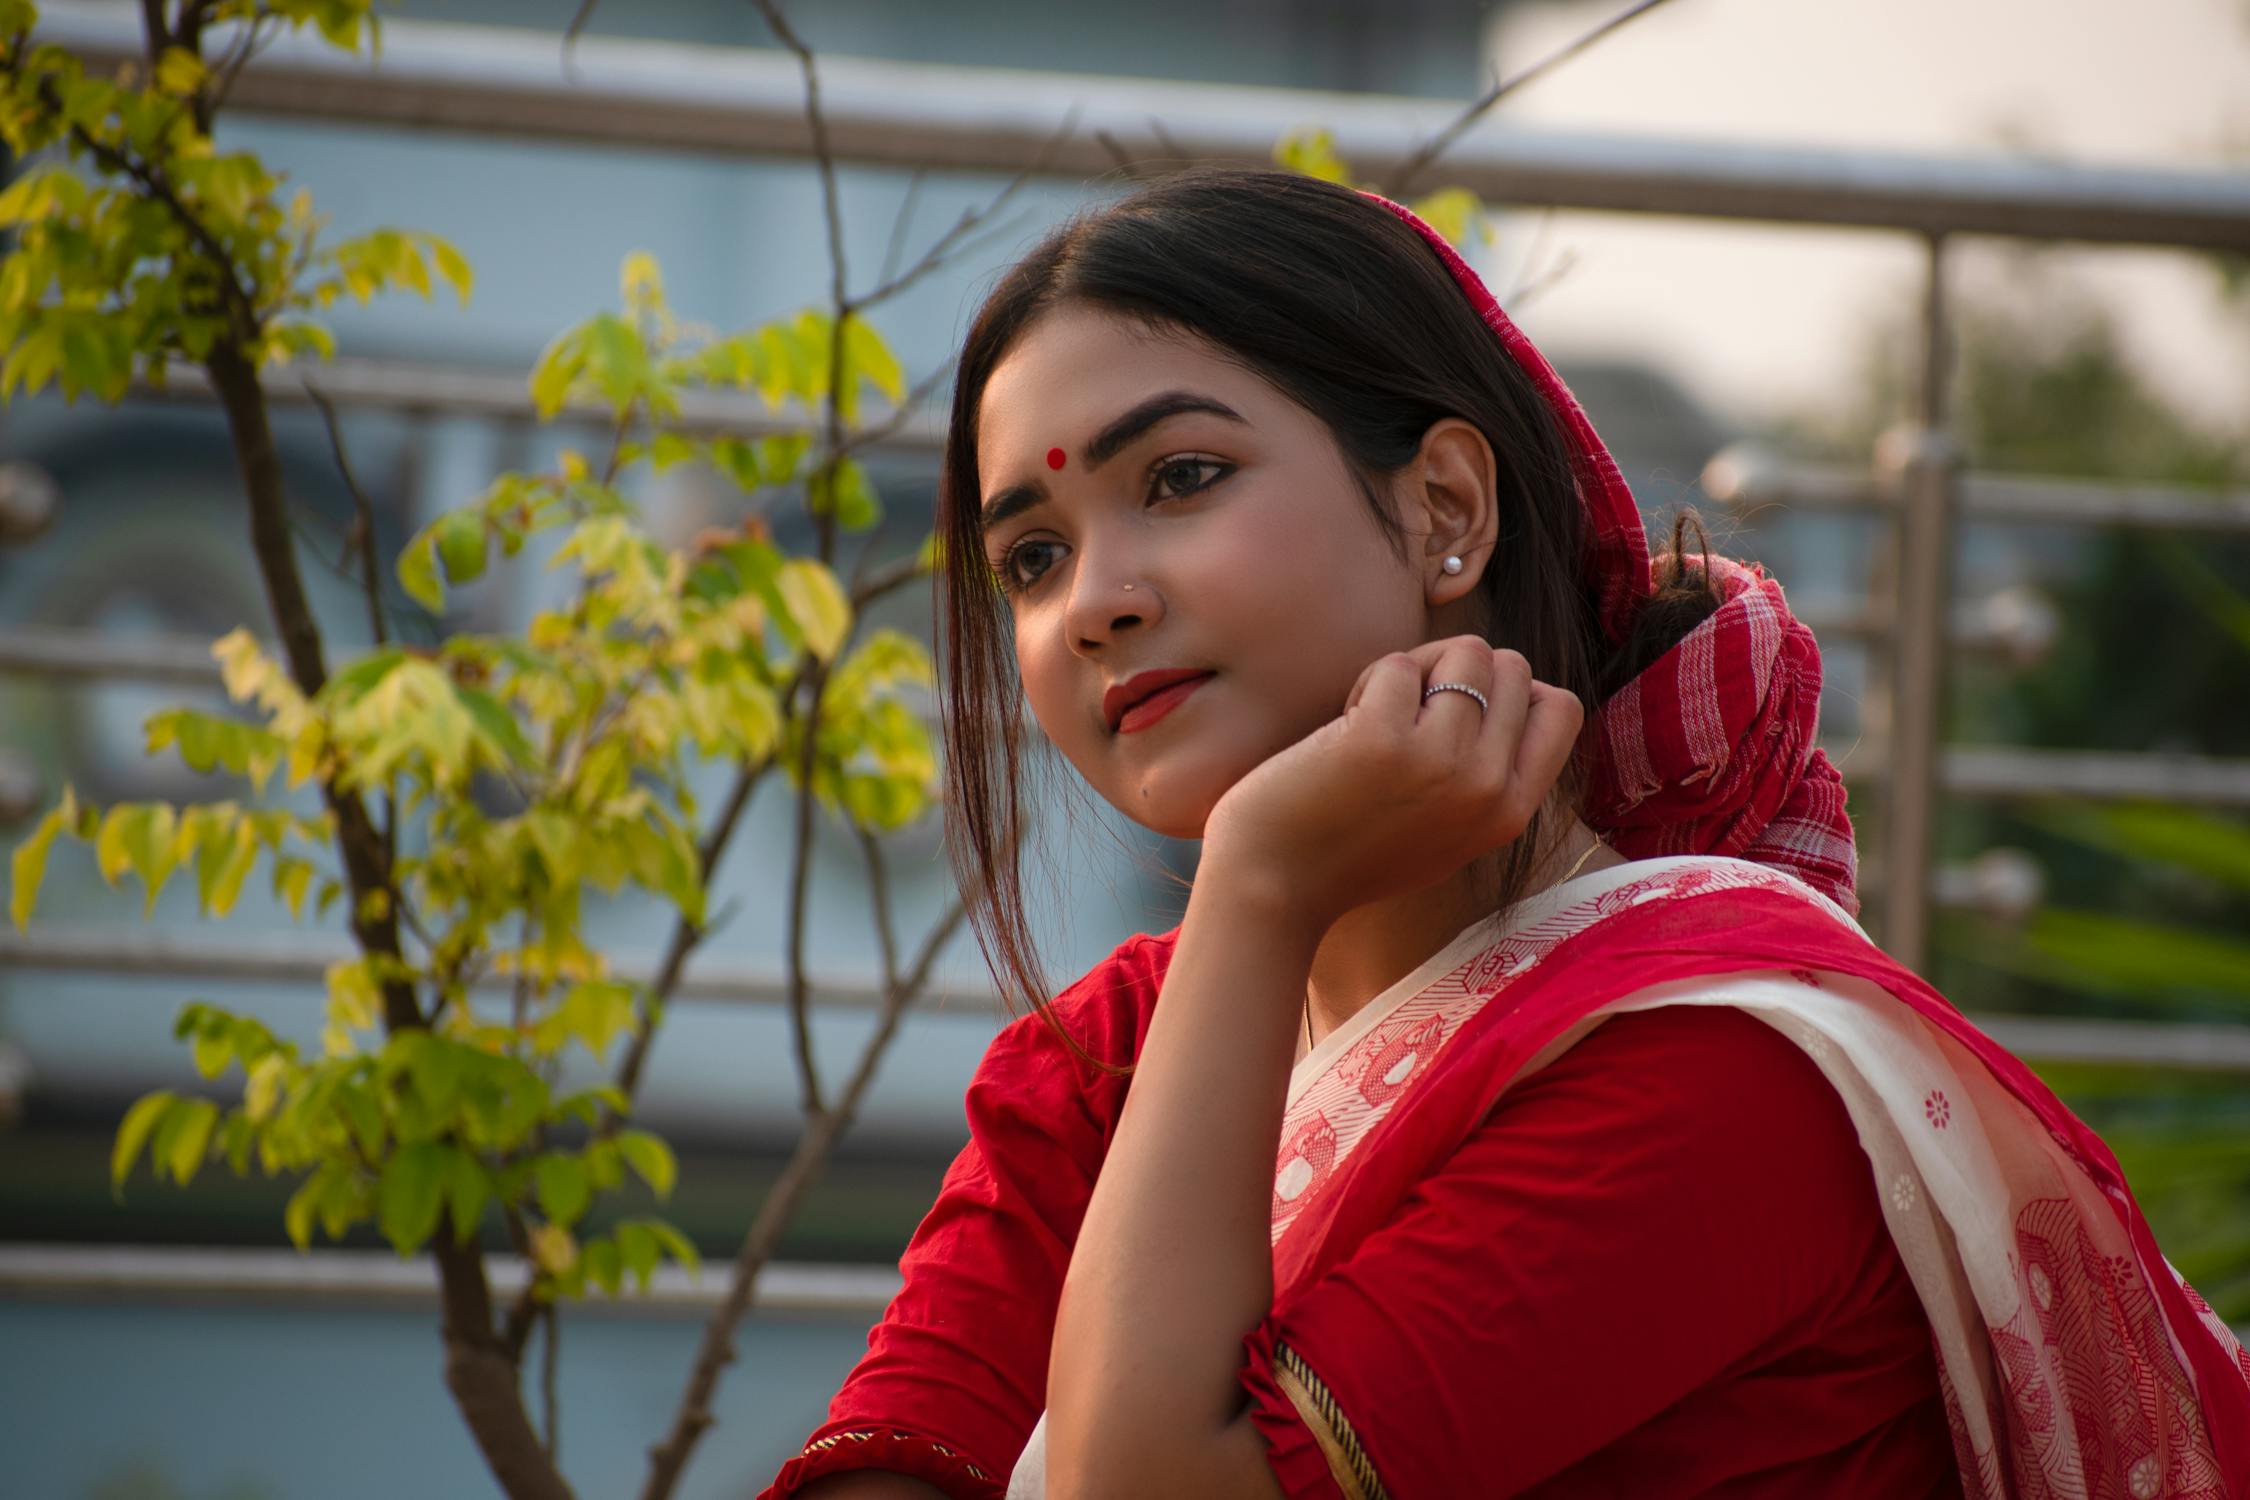 White Sari/Saree Photo by Subha Banik from Pexels: https://www.pexels.com/photo/a-girl-wearing-a-red-sari-8157120/